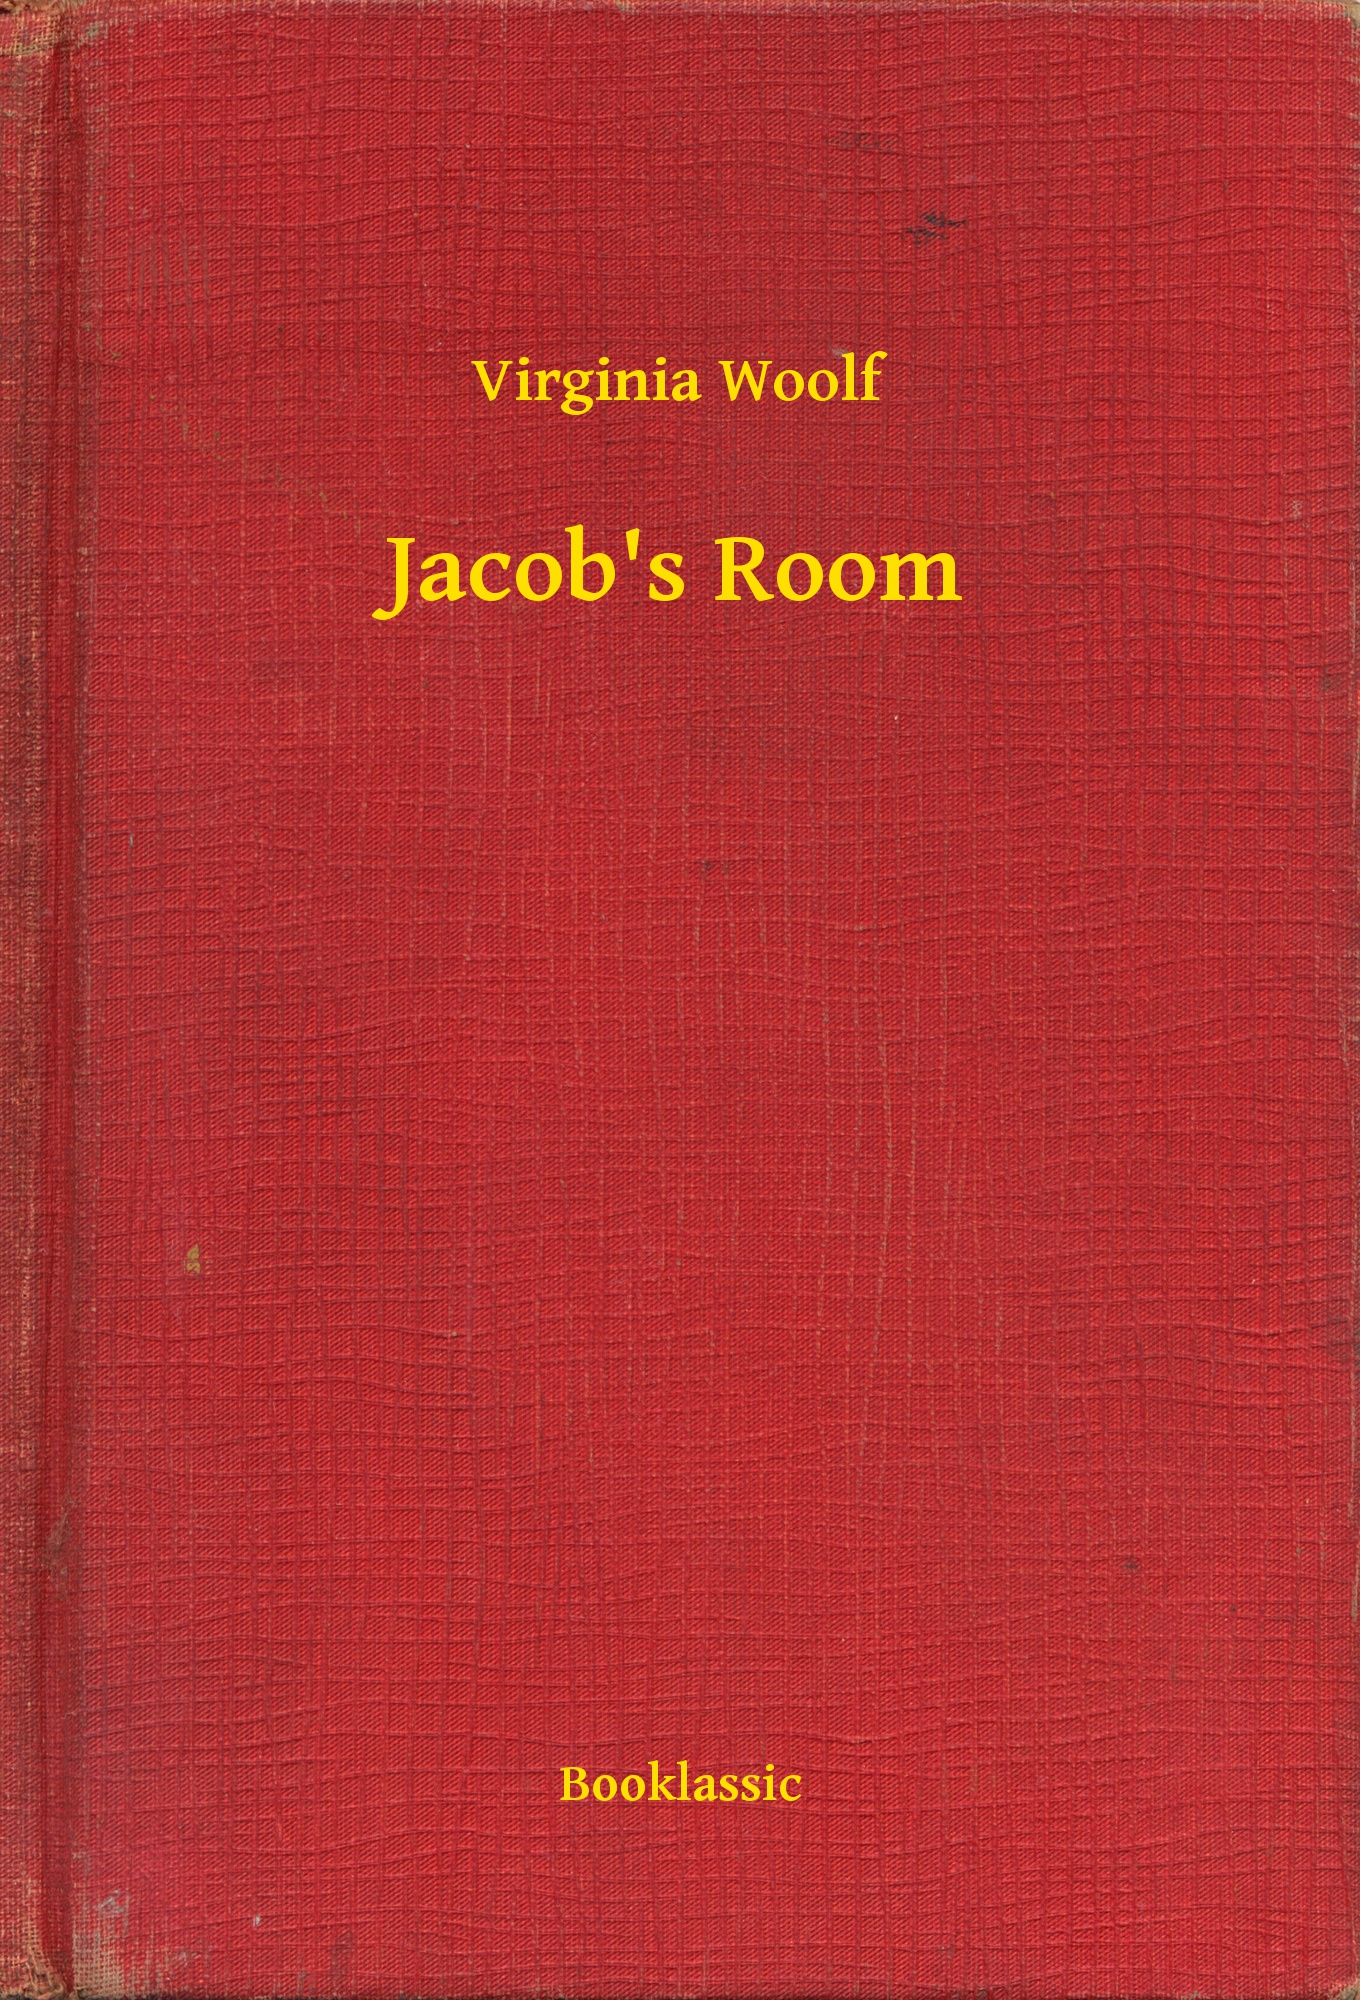 Jacob"s Room